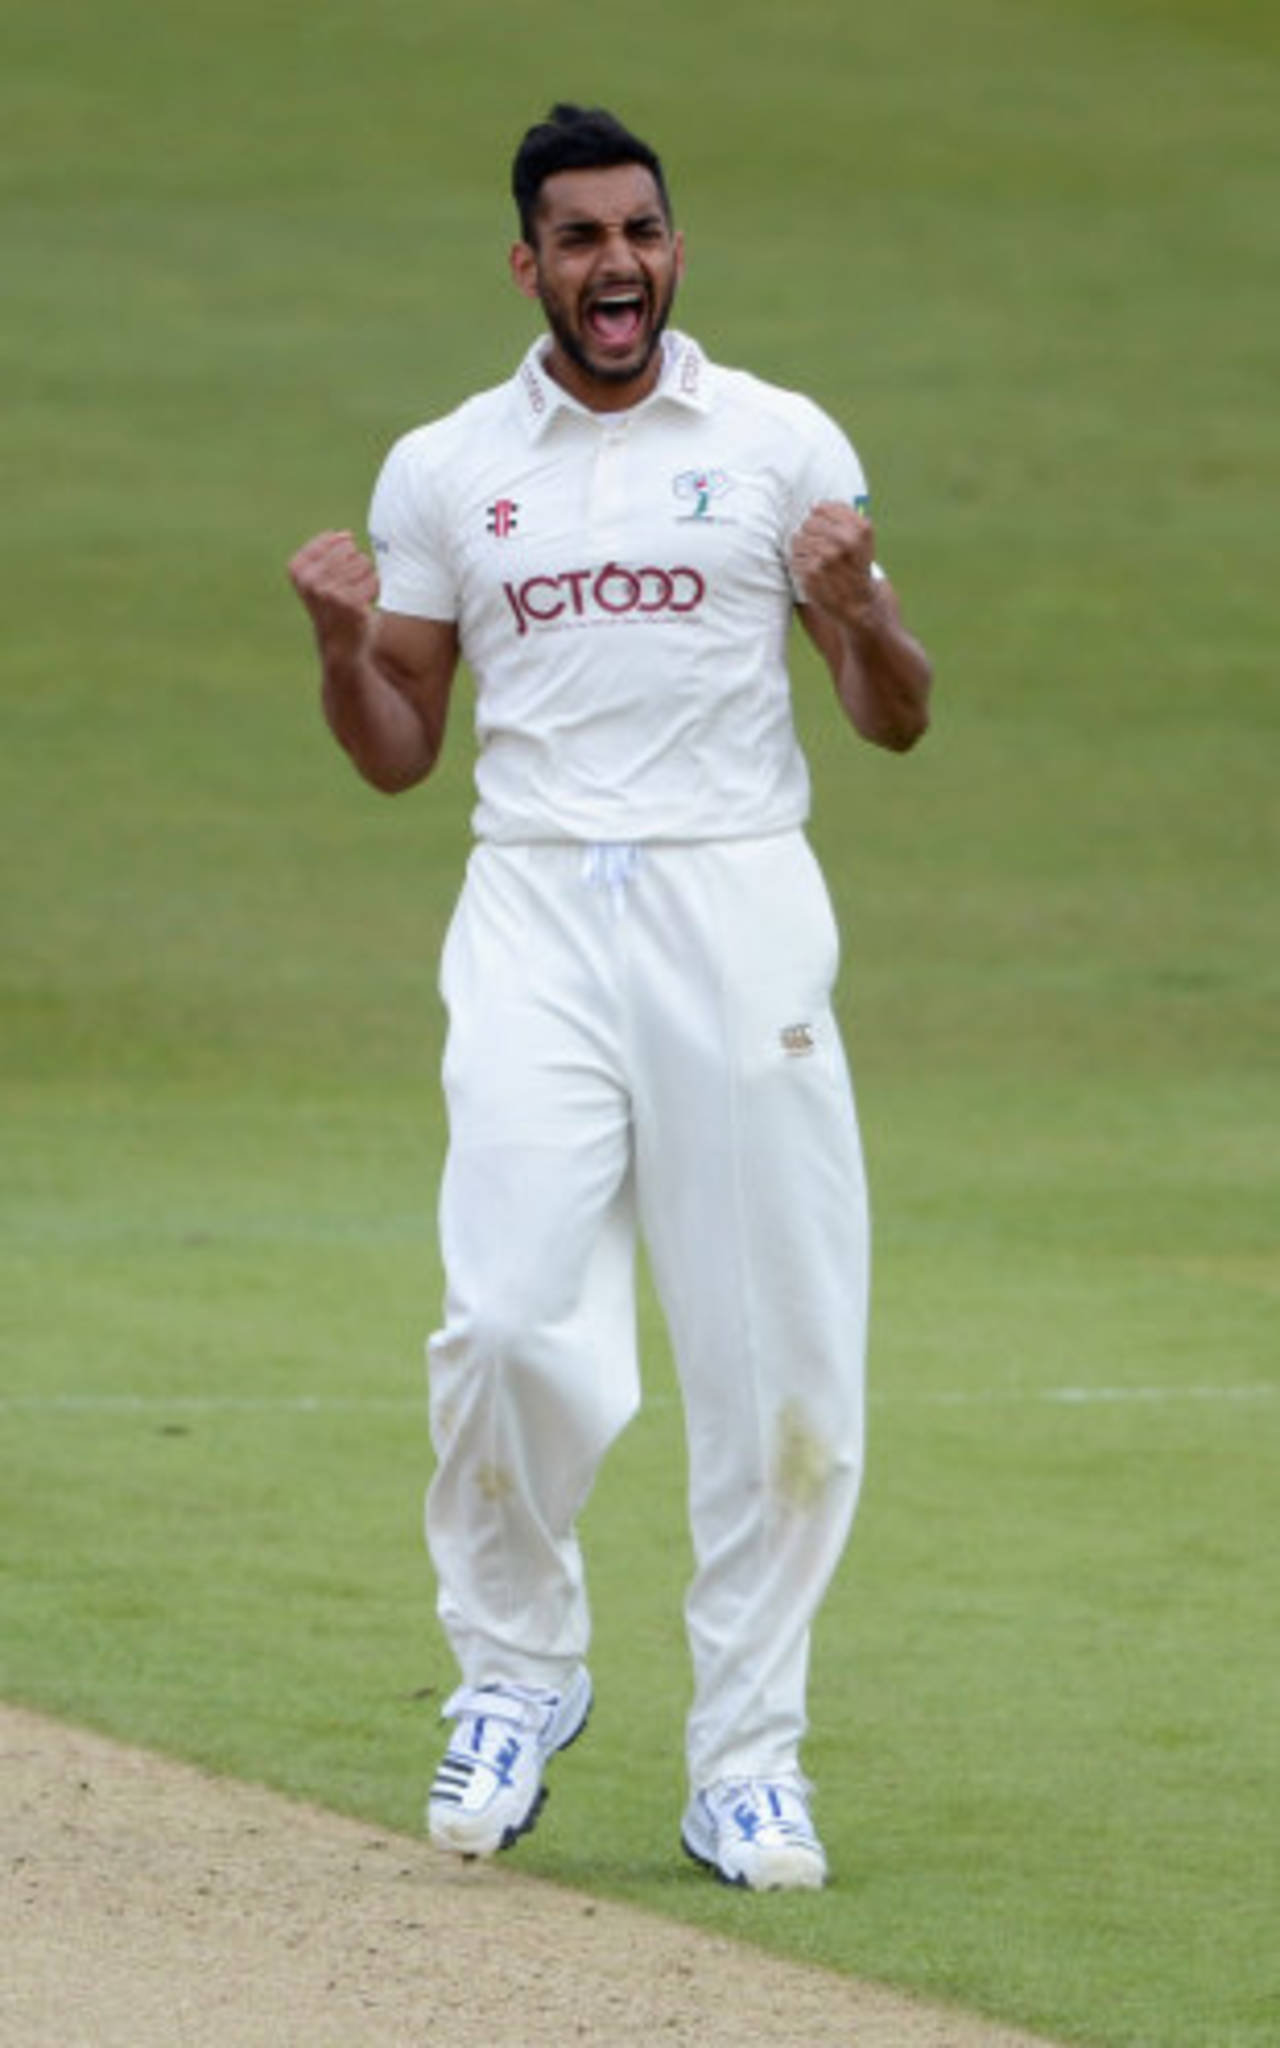 Ajmal Shahzad celebrates taking a wicket, Yorkshire v Kent, County Championship, Headingley, 2nd day, April 6, 2012